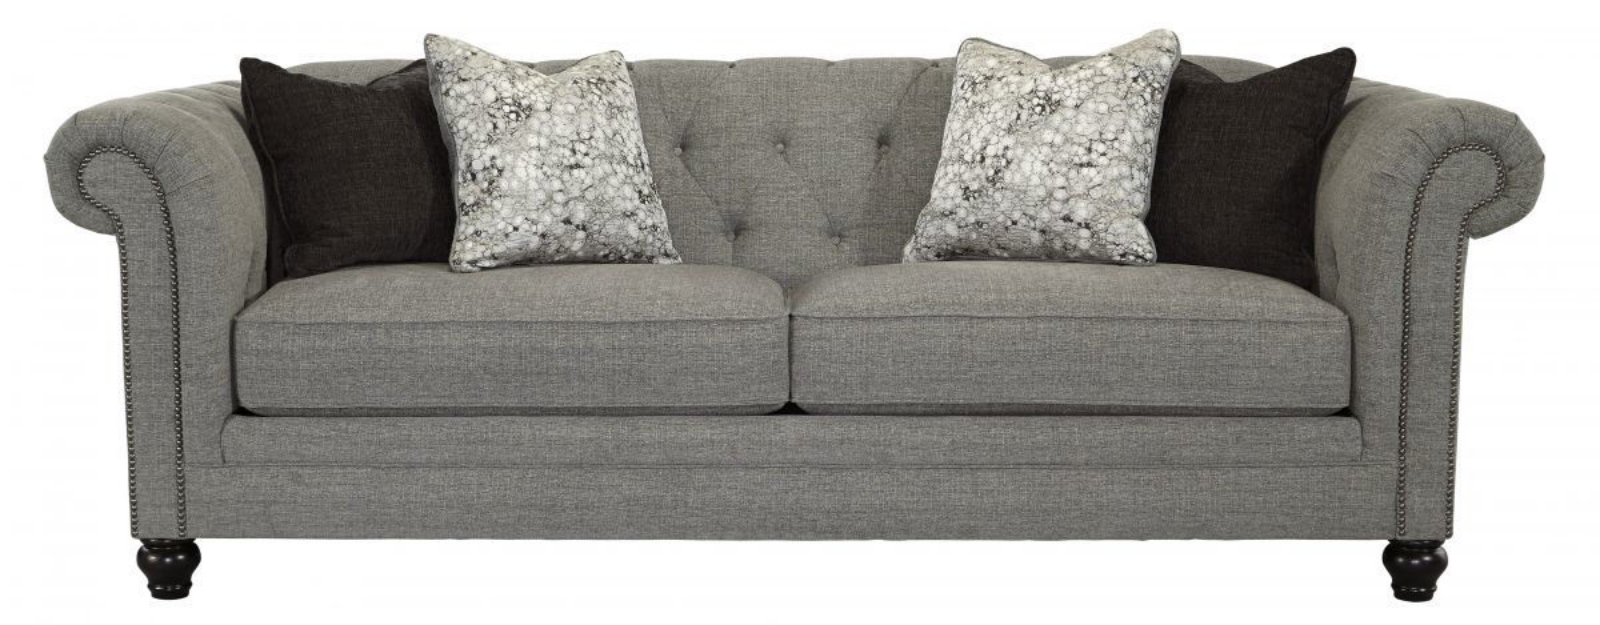 Picture of Ardenboro Sofa